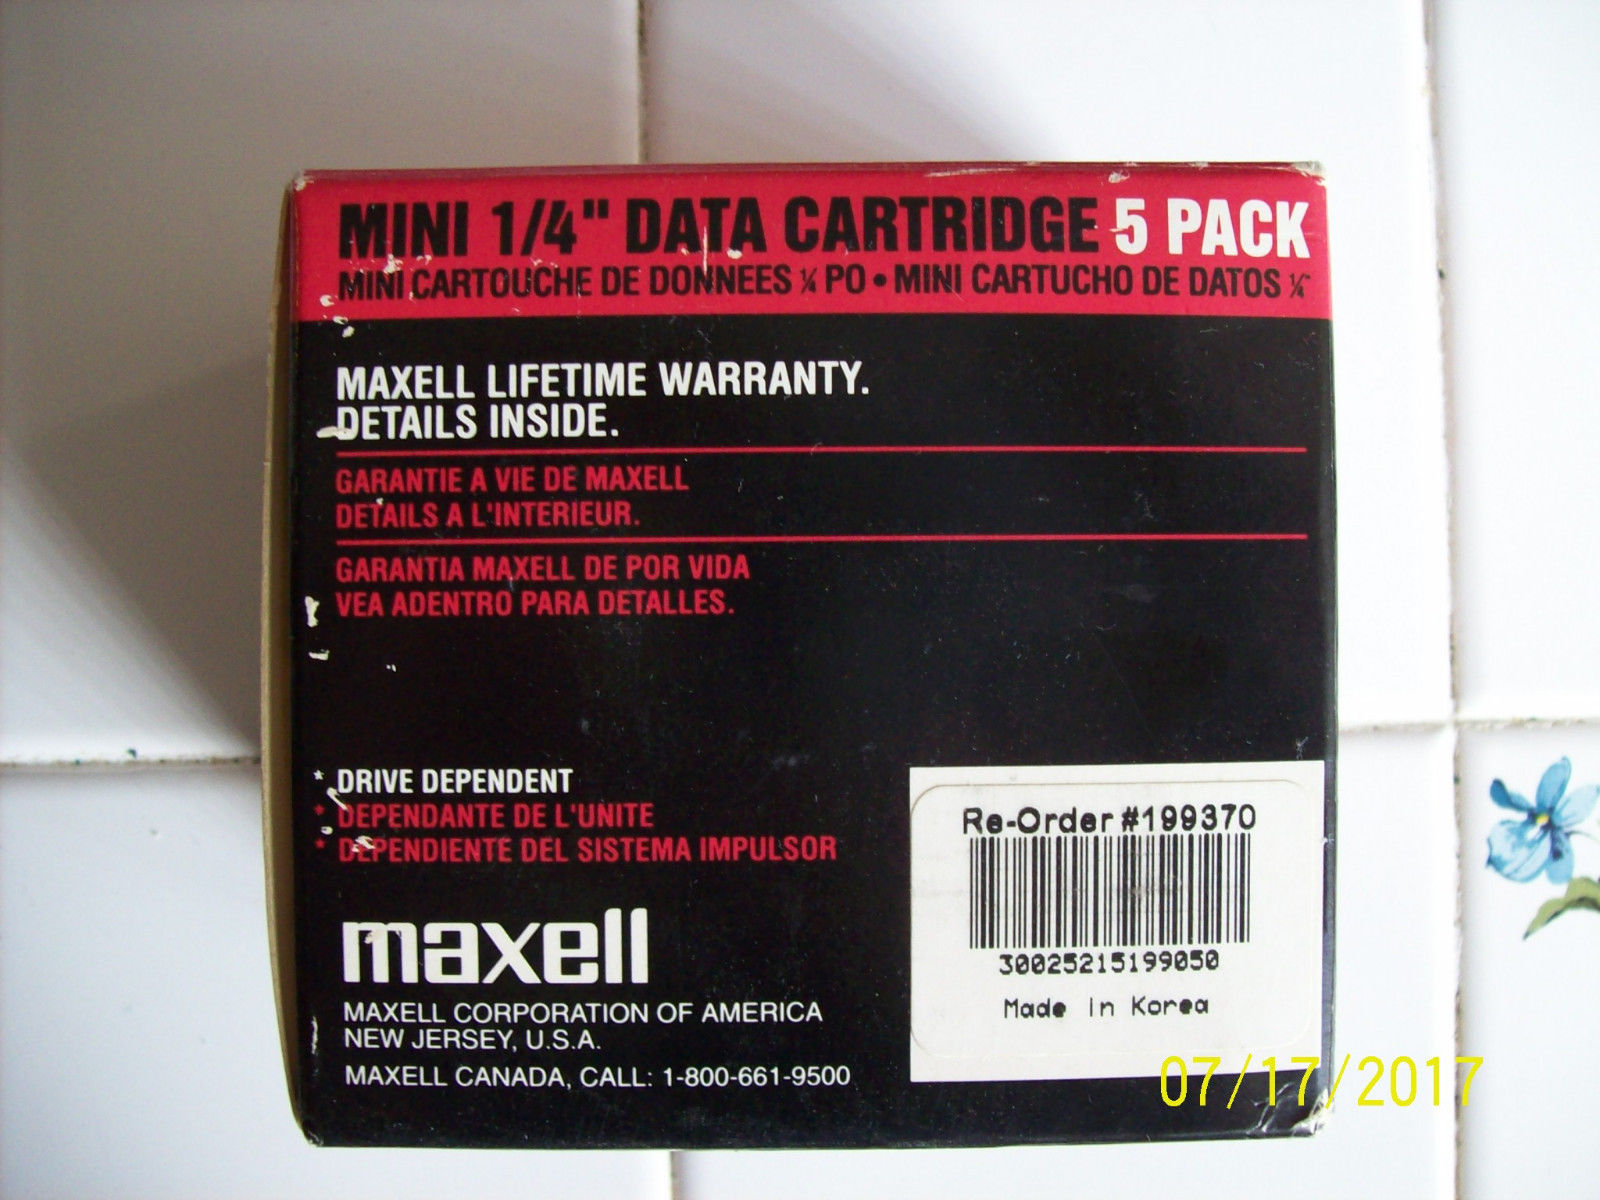 Maxell DC-2120 Mini Data Cartridge (1/4") -- Lot of 5 NIB